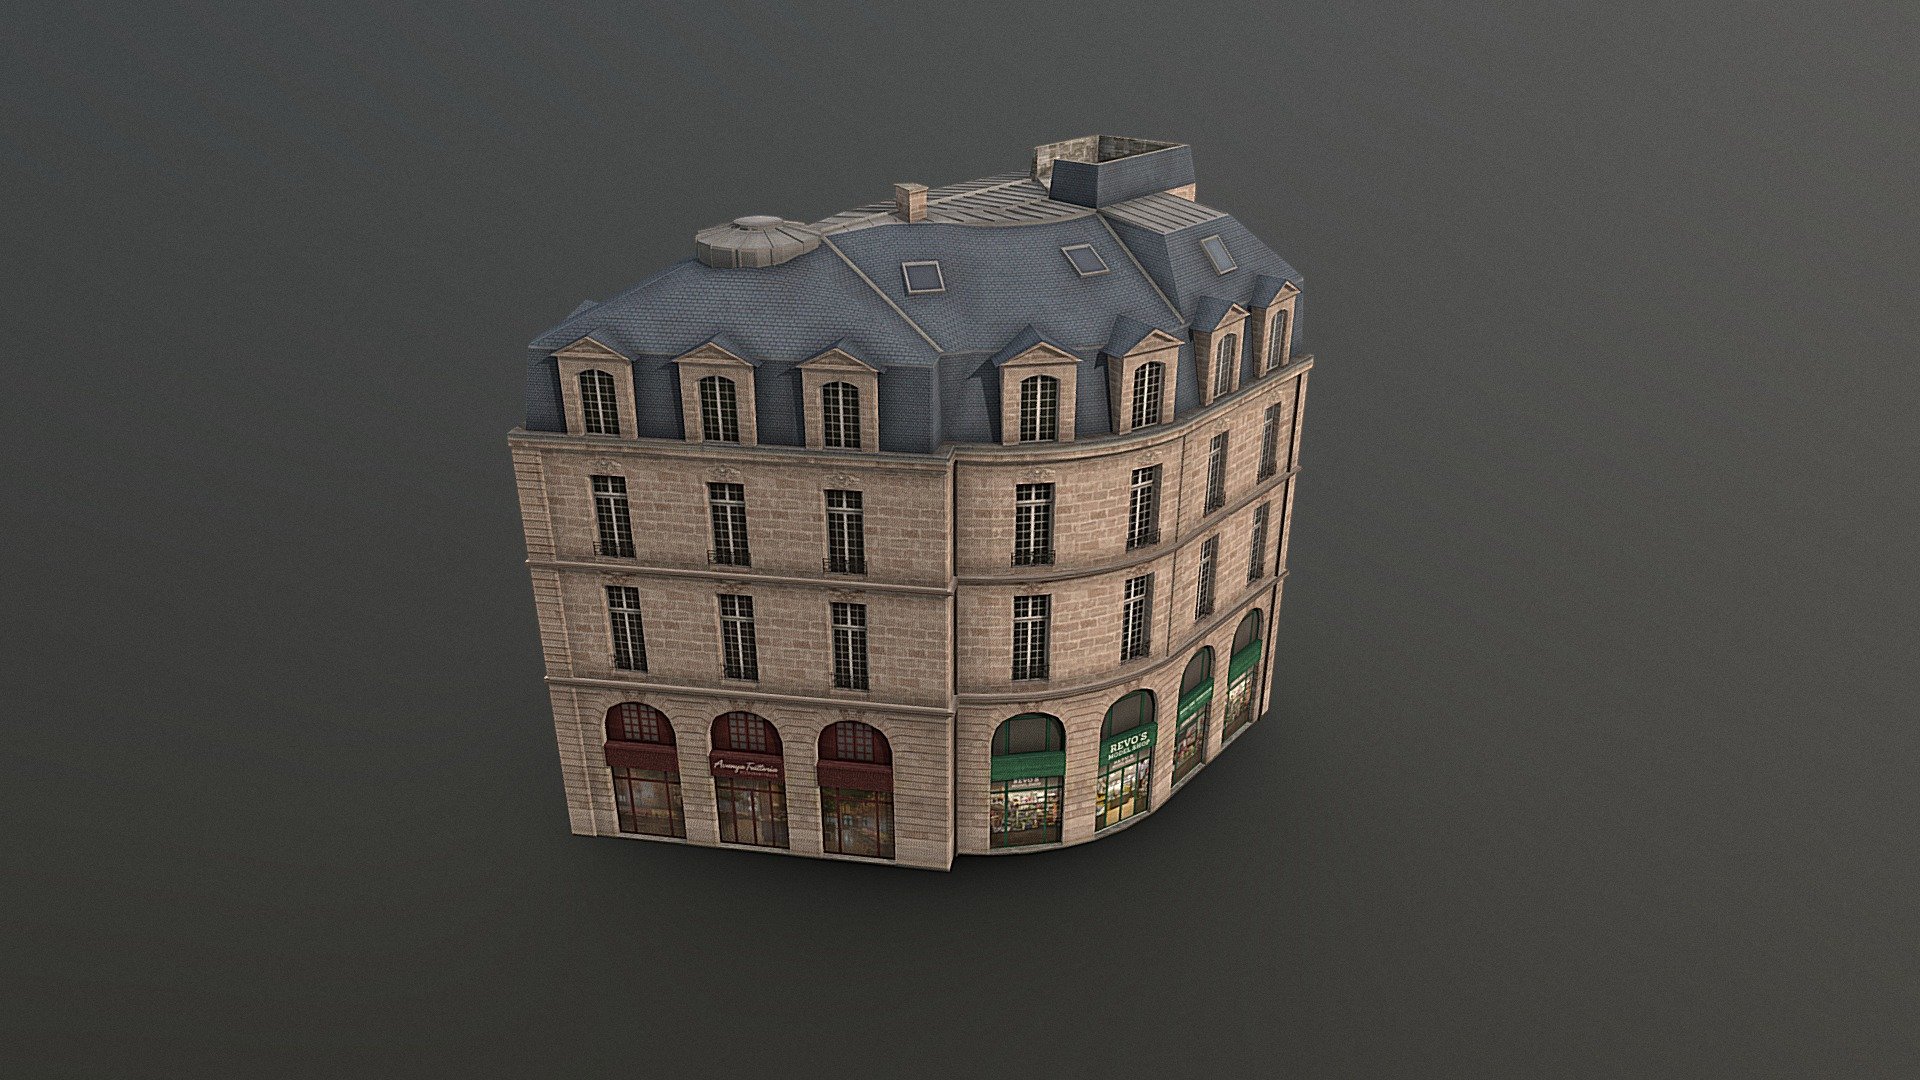 Bordeaux building corner #1
Asset for Cities: Skylines

📦https://steamcommunity.com/sharedfiles/filedetails/?id=1983988842 - Bordeaux Corner #1 - Buy Royalty Free 3D model by GrunyStudio 3d model